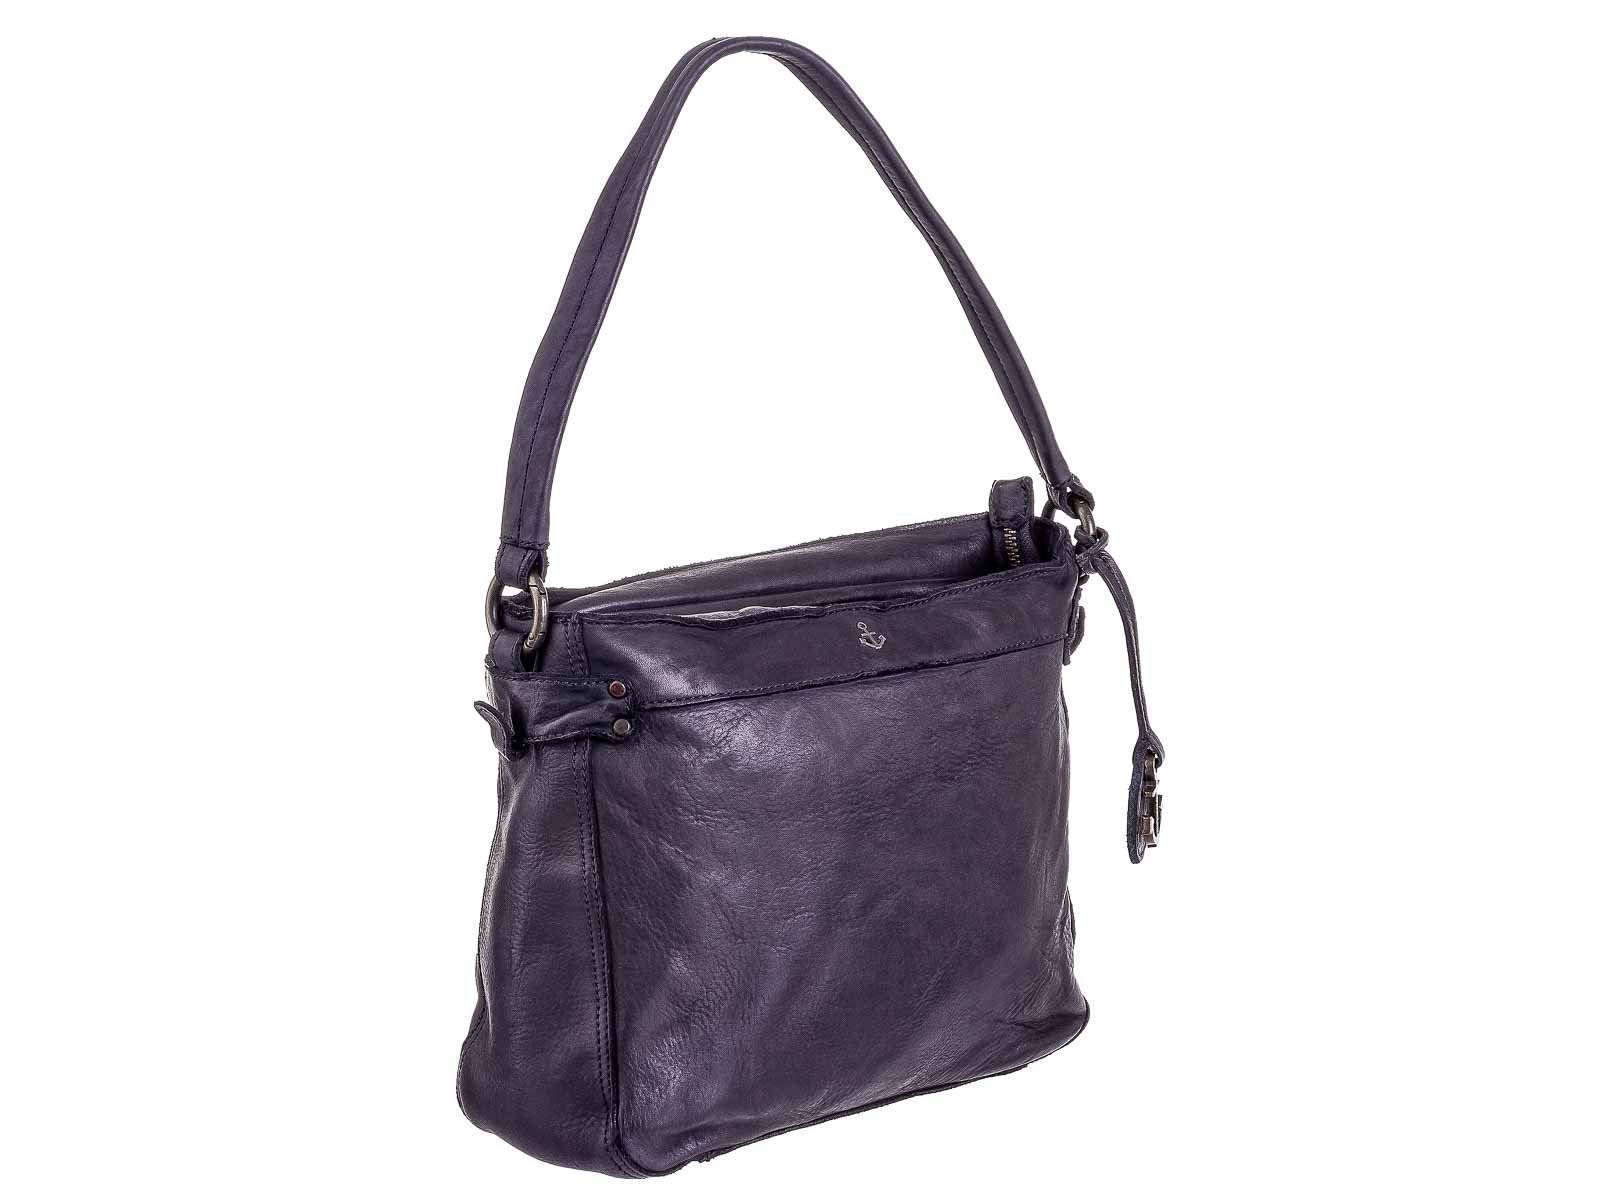 Mini Kira Tasche mit Tragegriff oben: Damen Taschen, Crossbody Bags